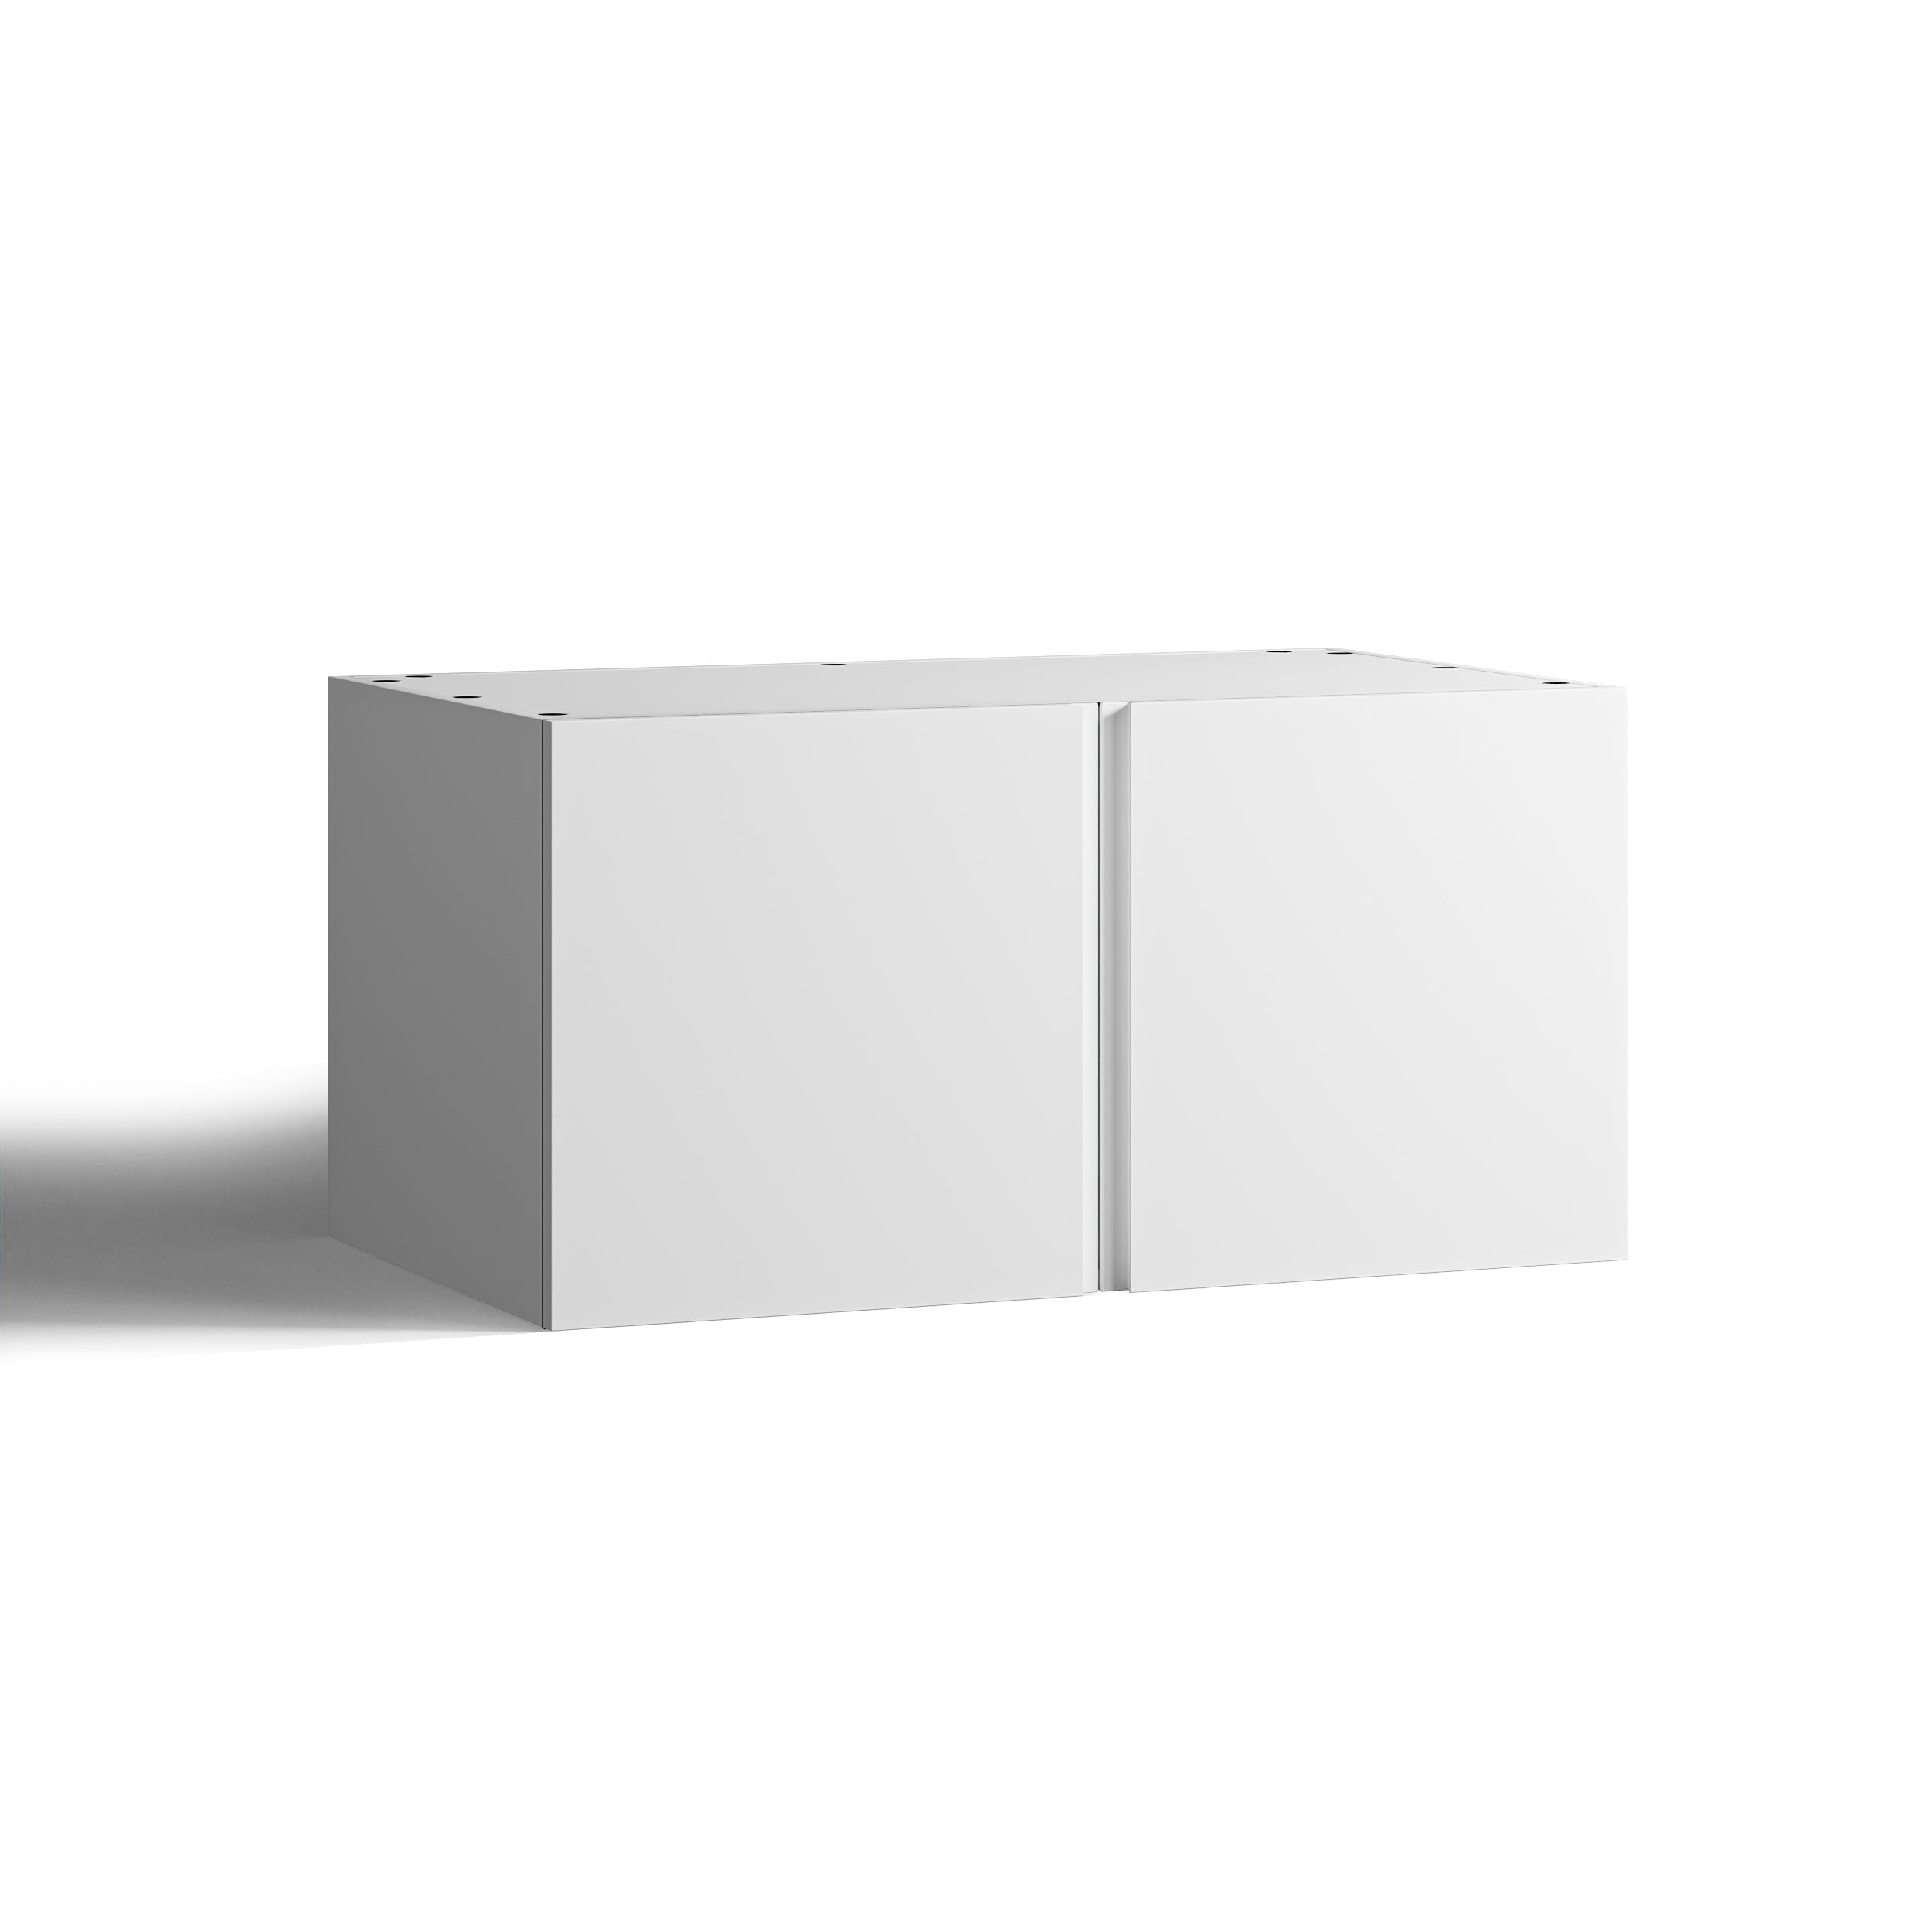 75x50 - Cabinet (58cm D) w 2 Doors - Finger Pull - PAX